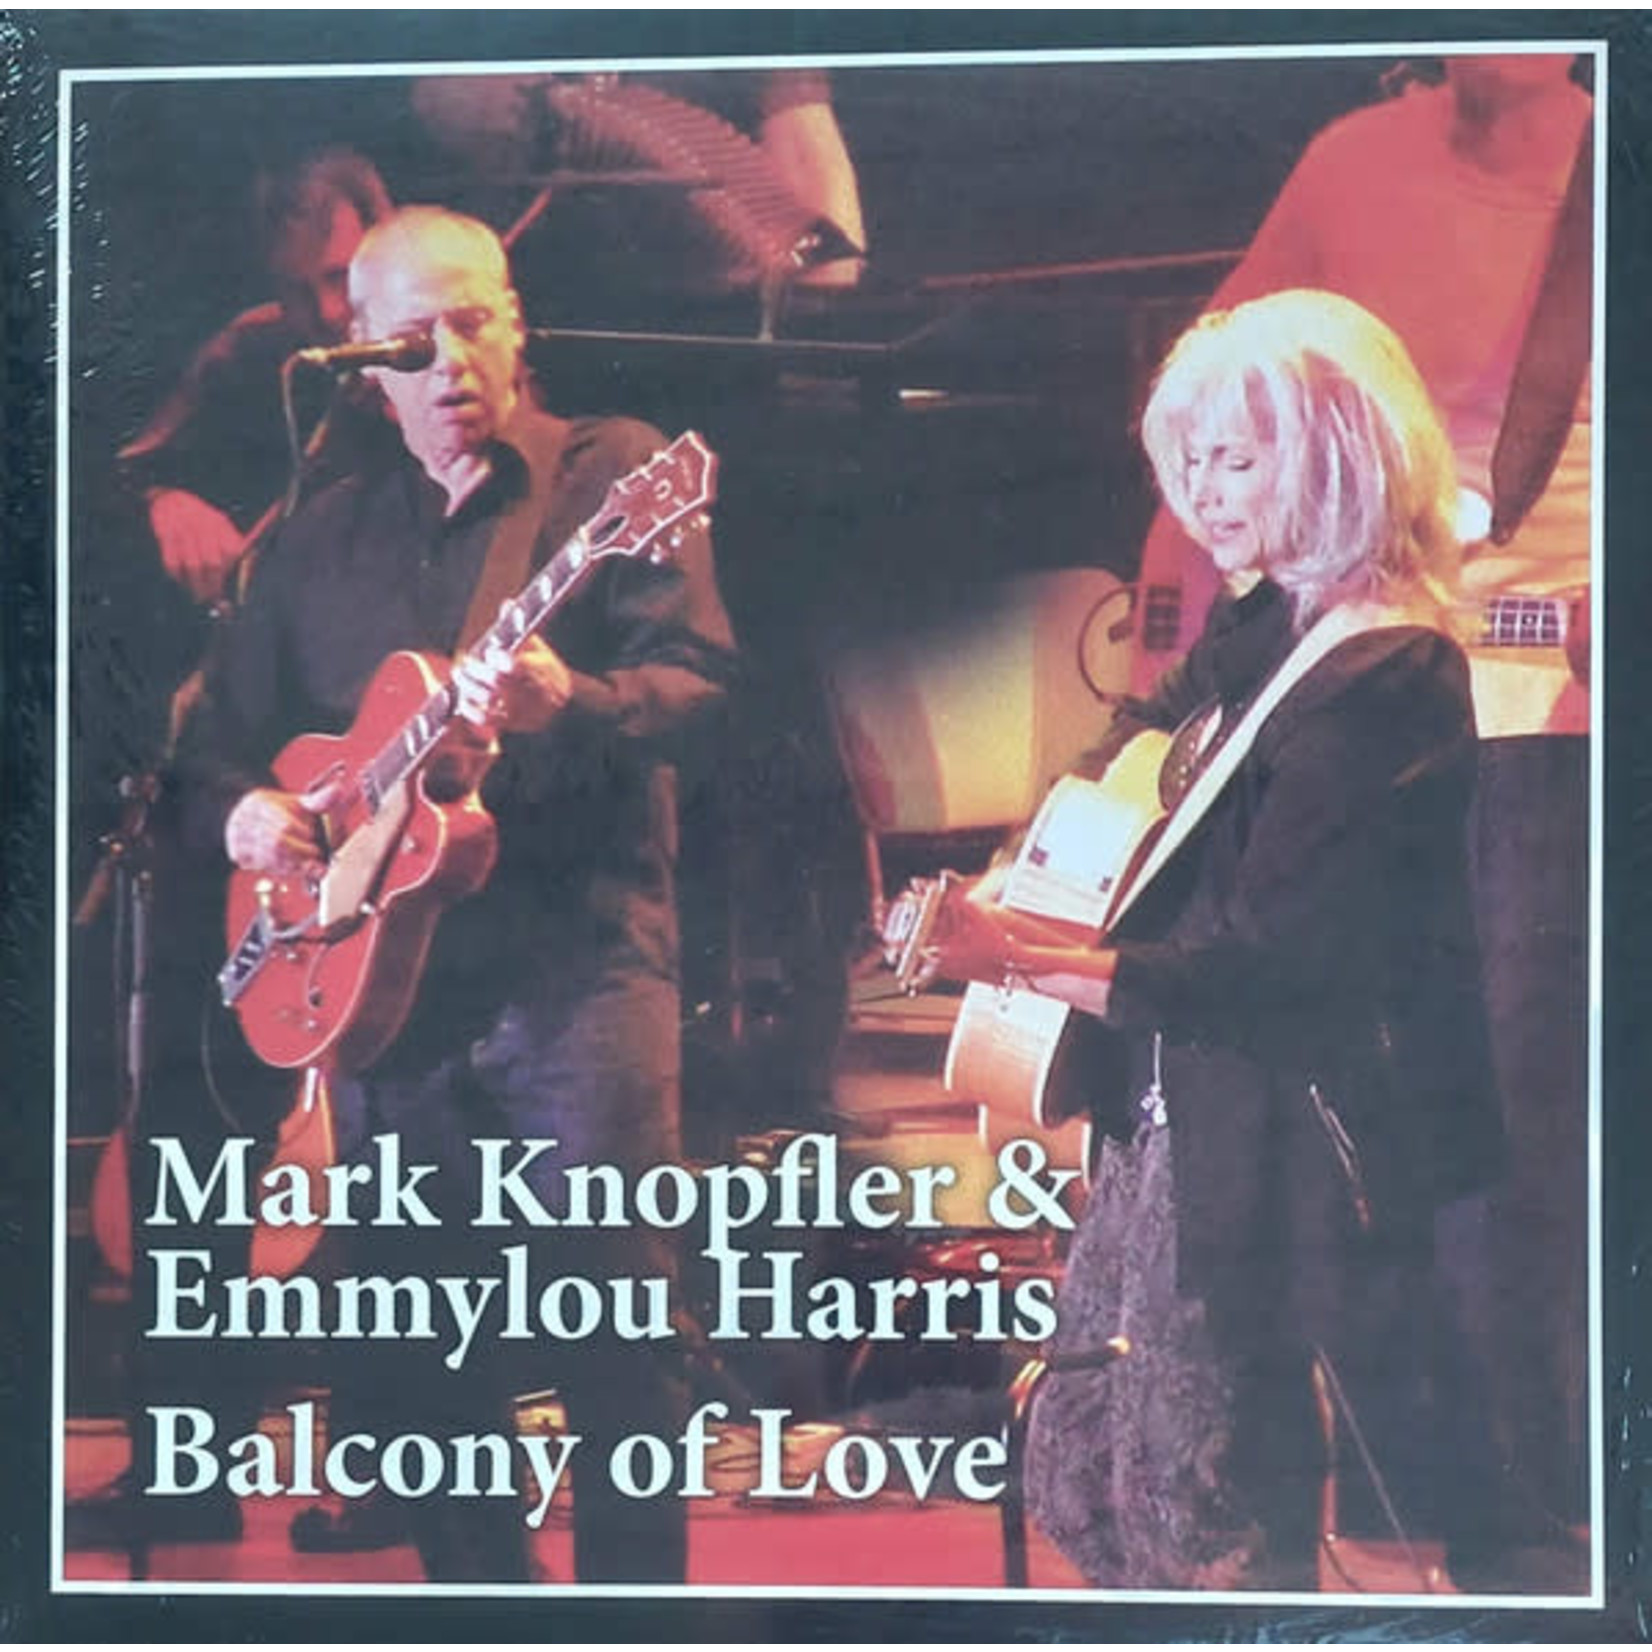 [New] Mark Knopfler & Emmylou Harris - Balcony Of Love (2LP, clear vinyl)